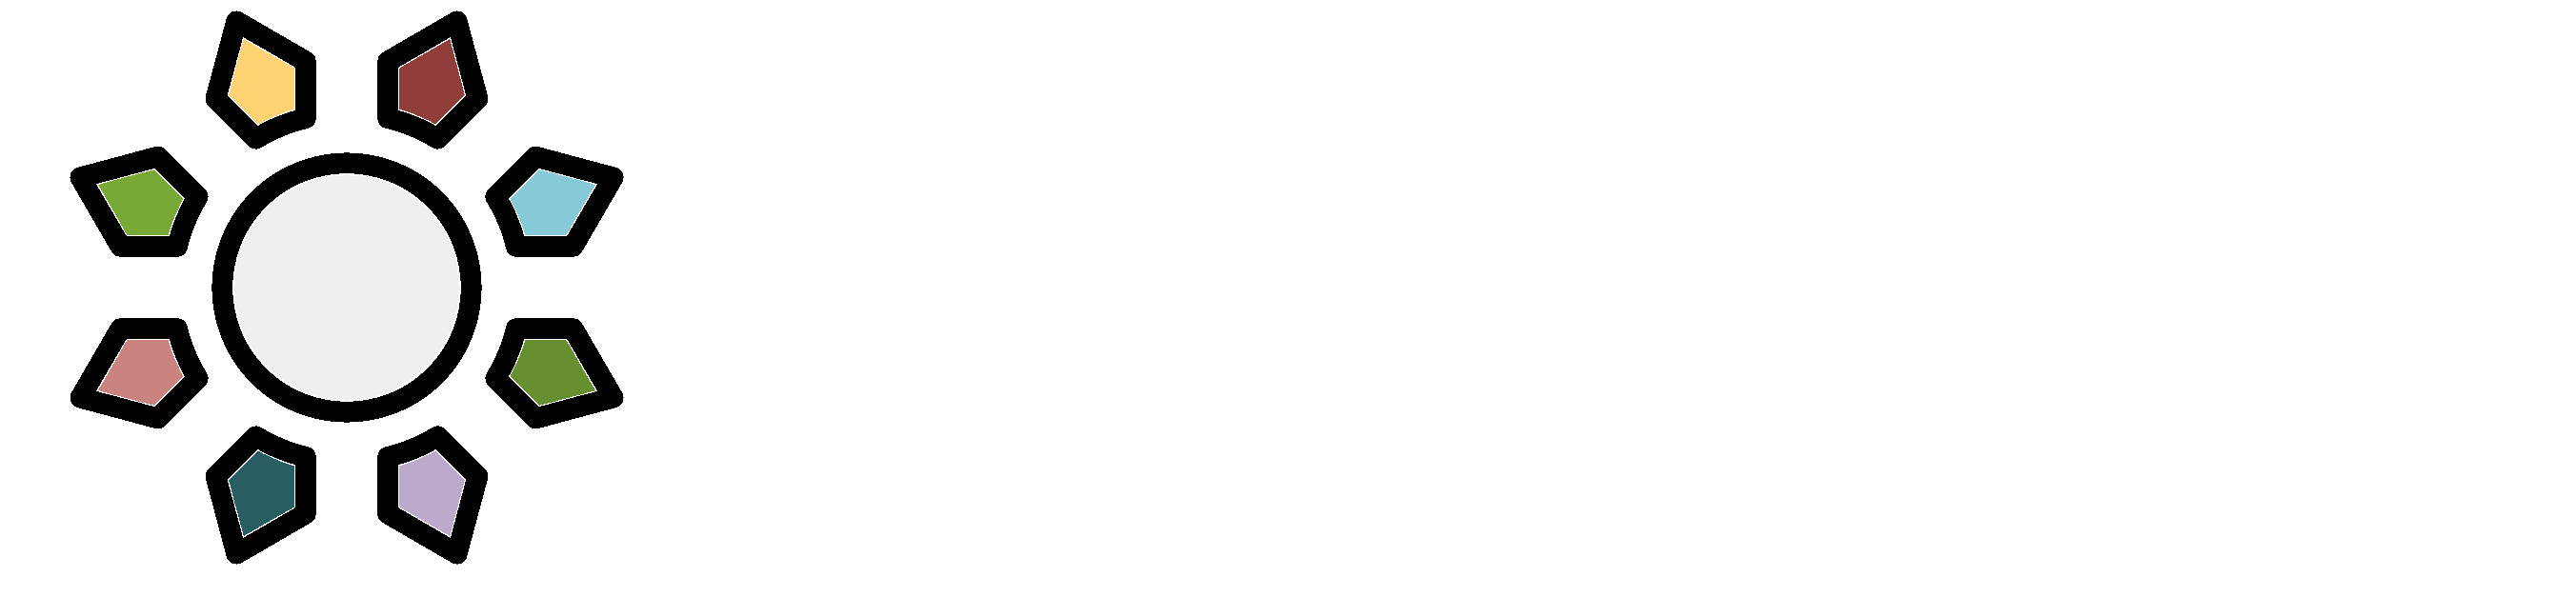 codeiful logo with sun